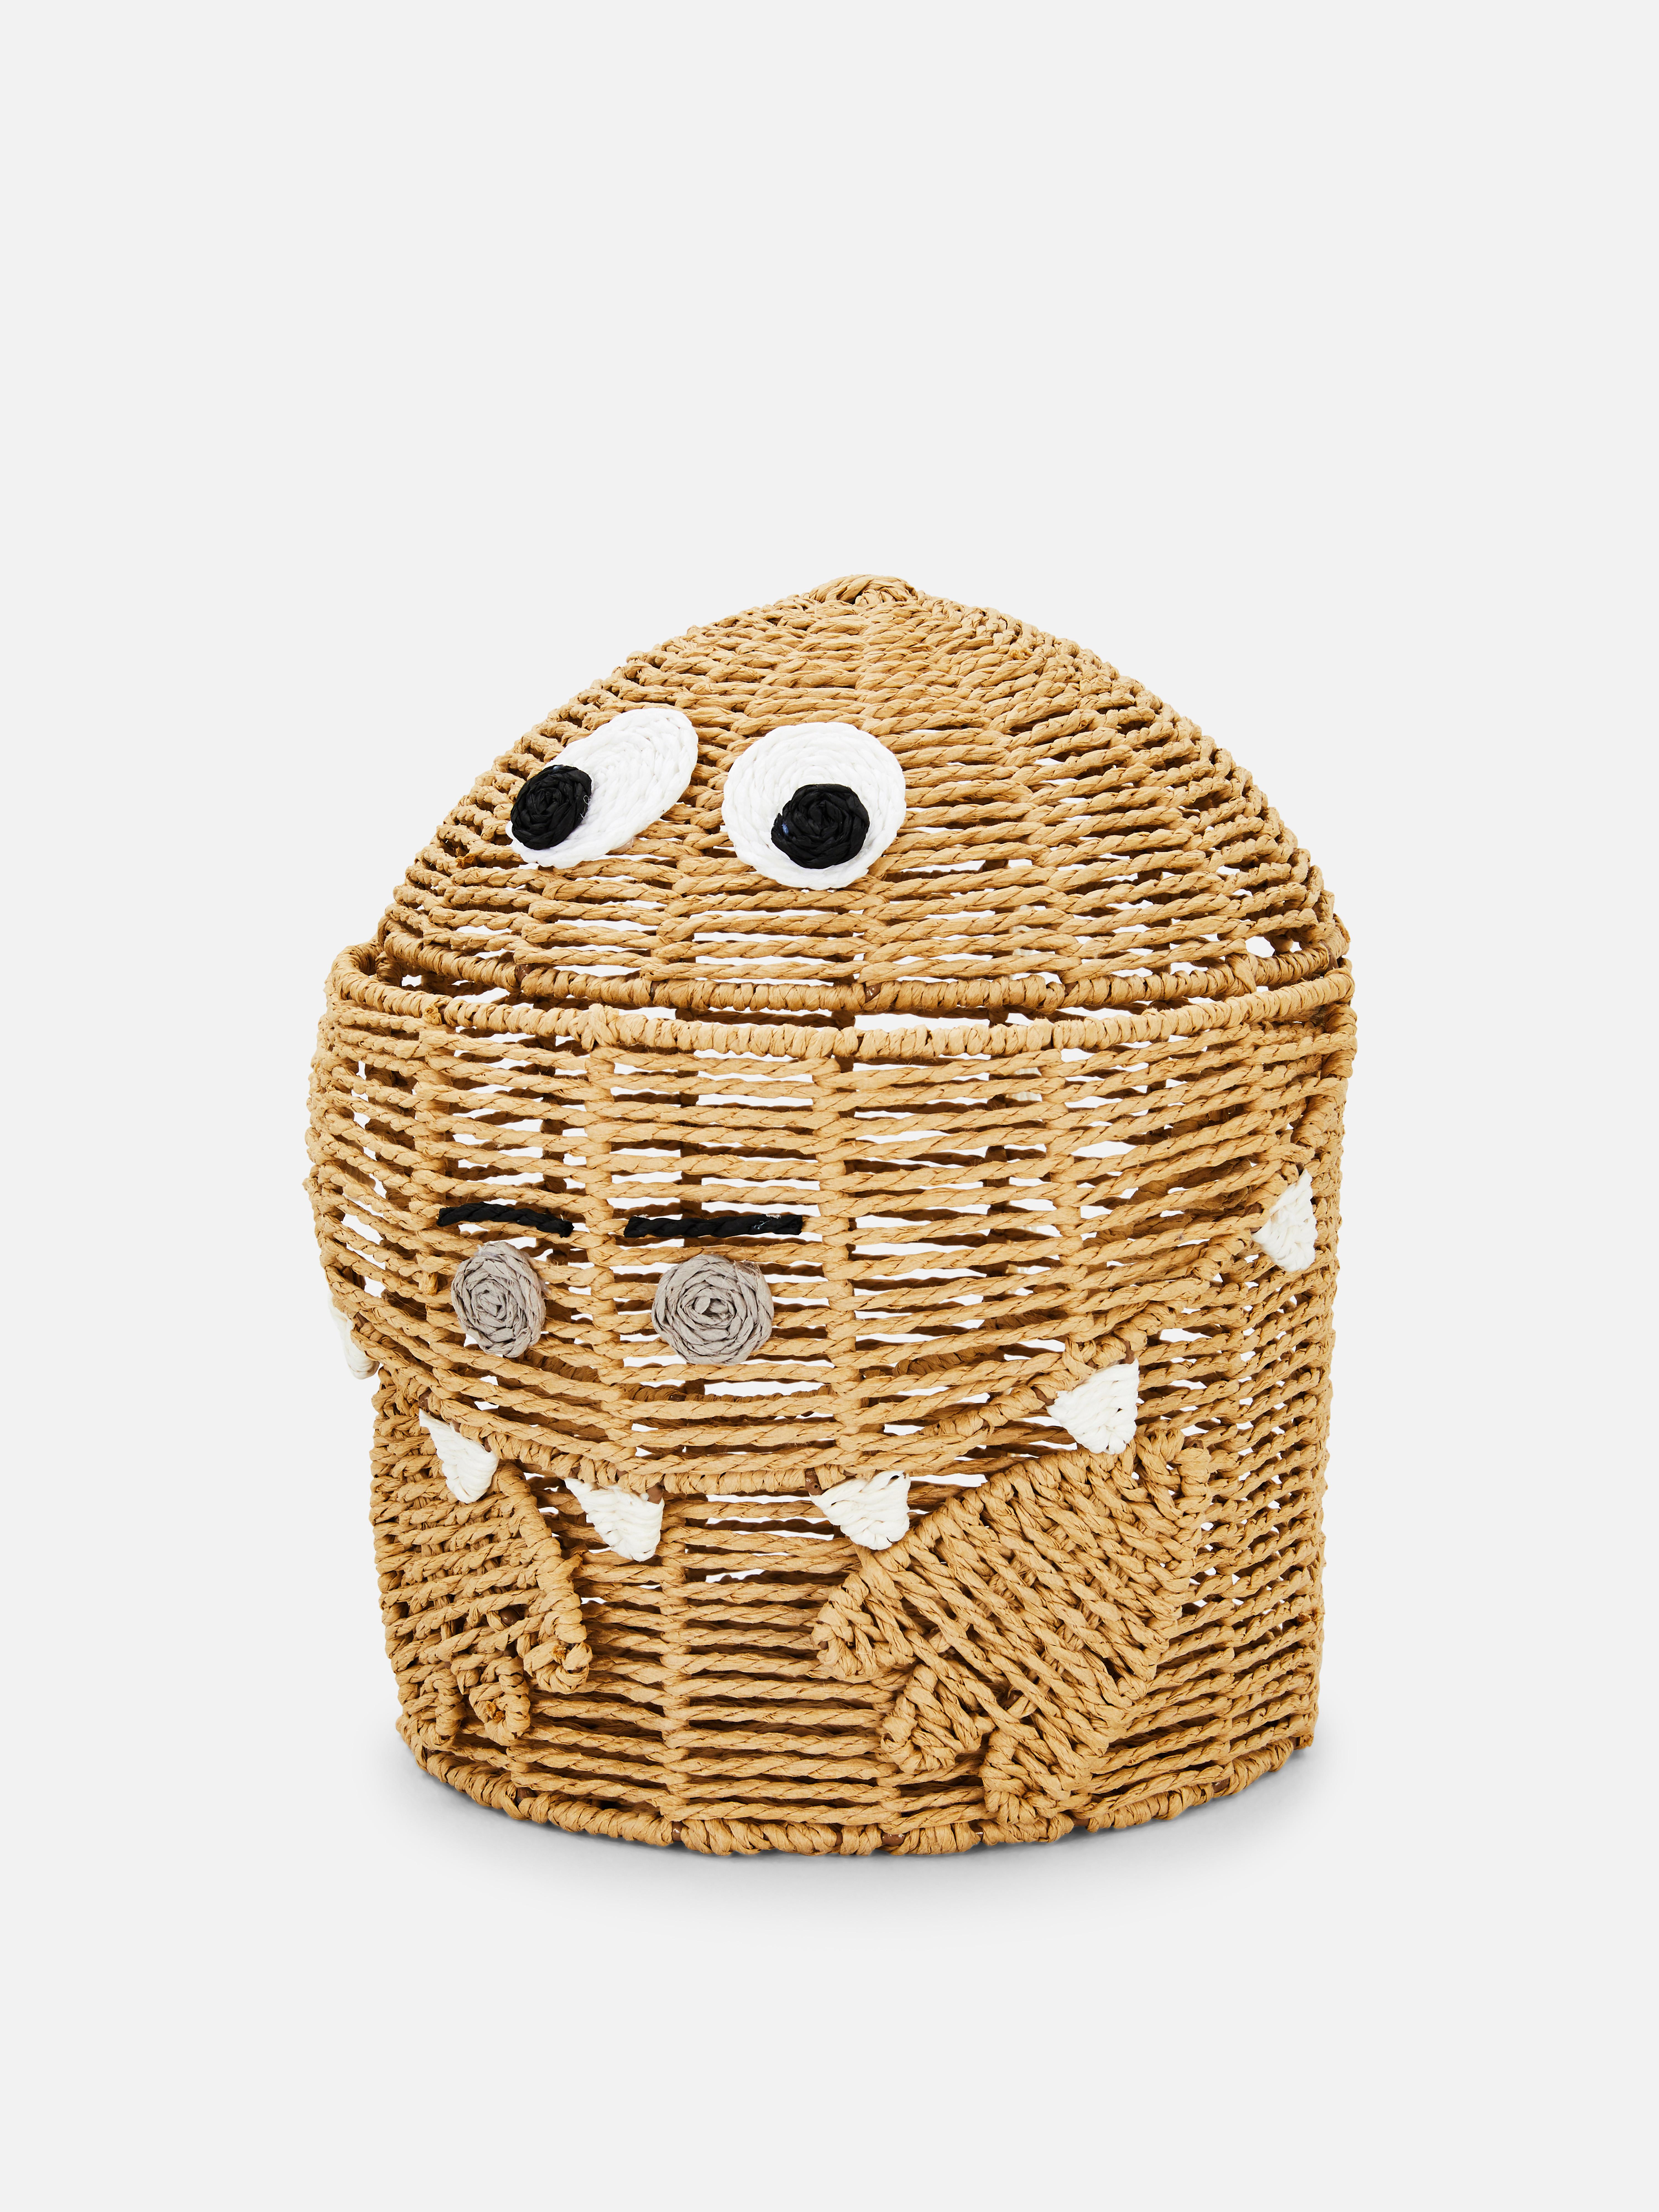 Novelty Creature Woven Basket